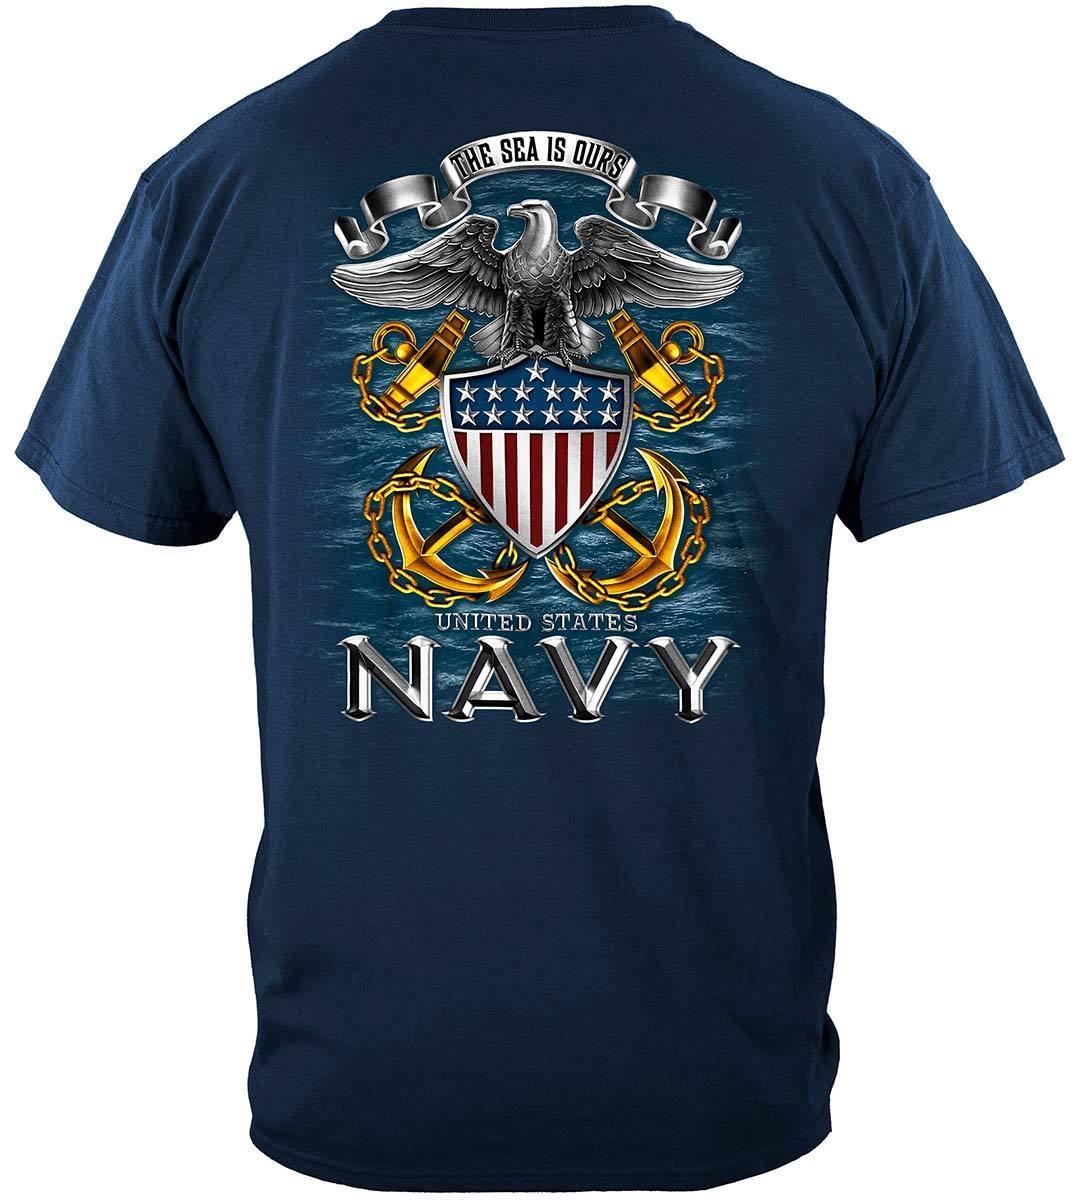 U.S. Navy The Seas is Ours Hoodie - Military Republic